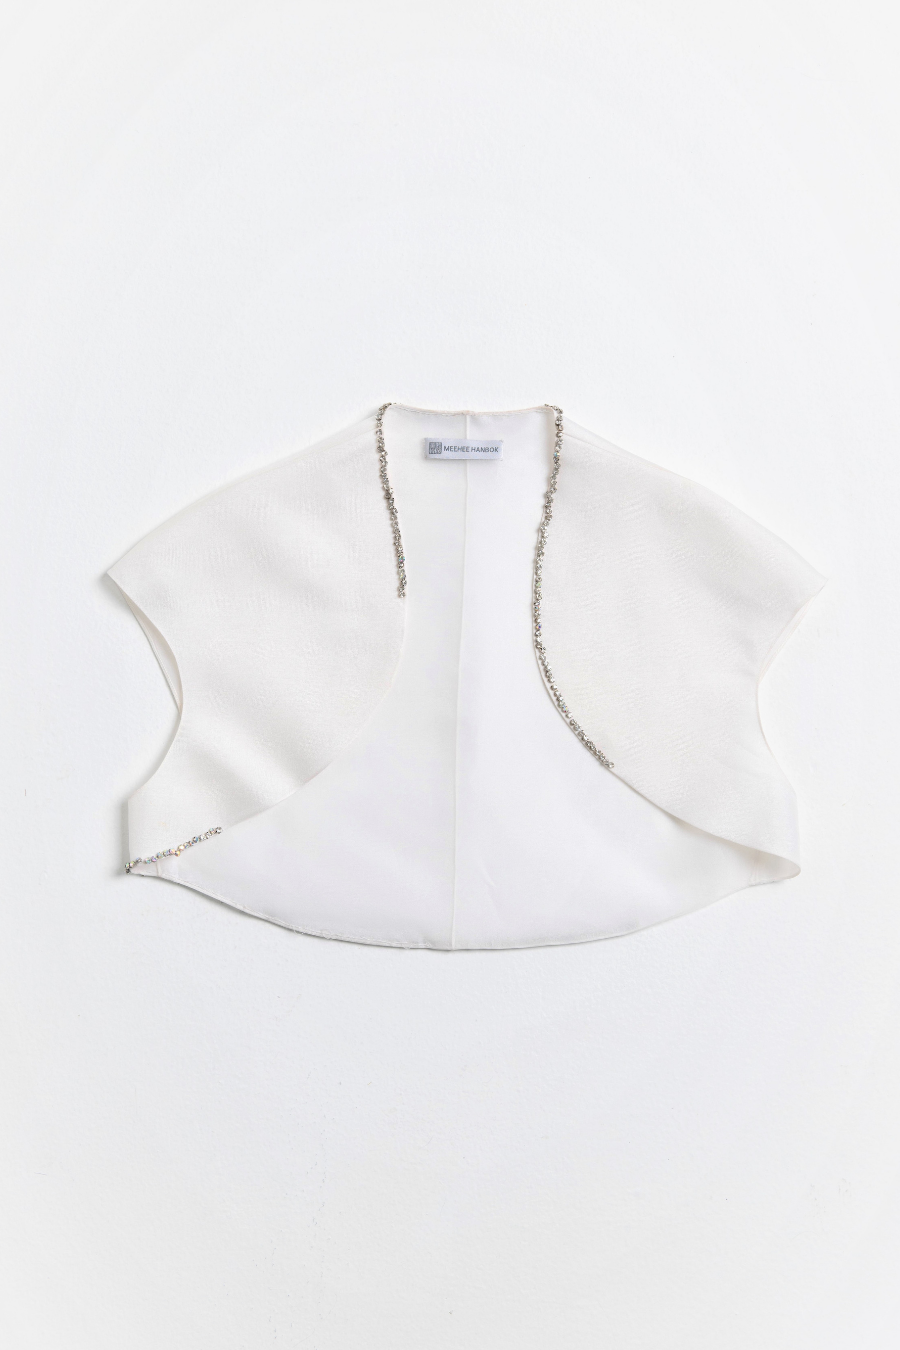 White Sleeveless Silk Vest (Bolero) With Hand Beading